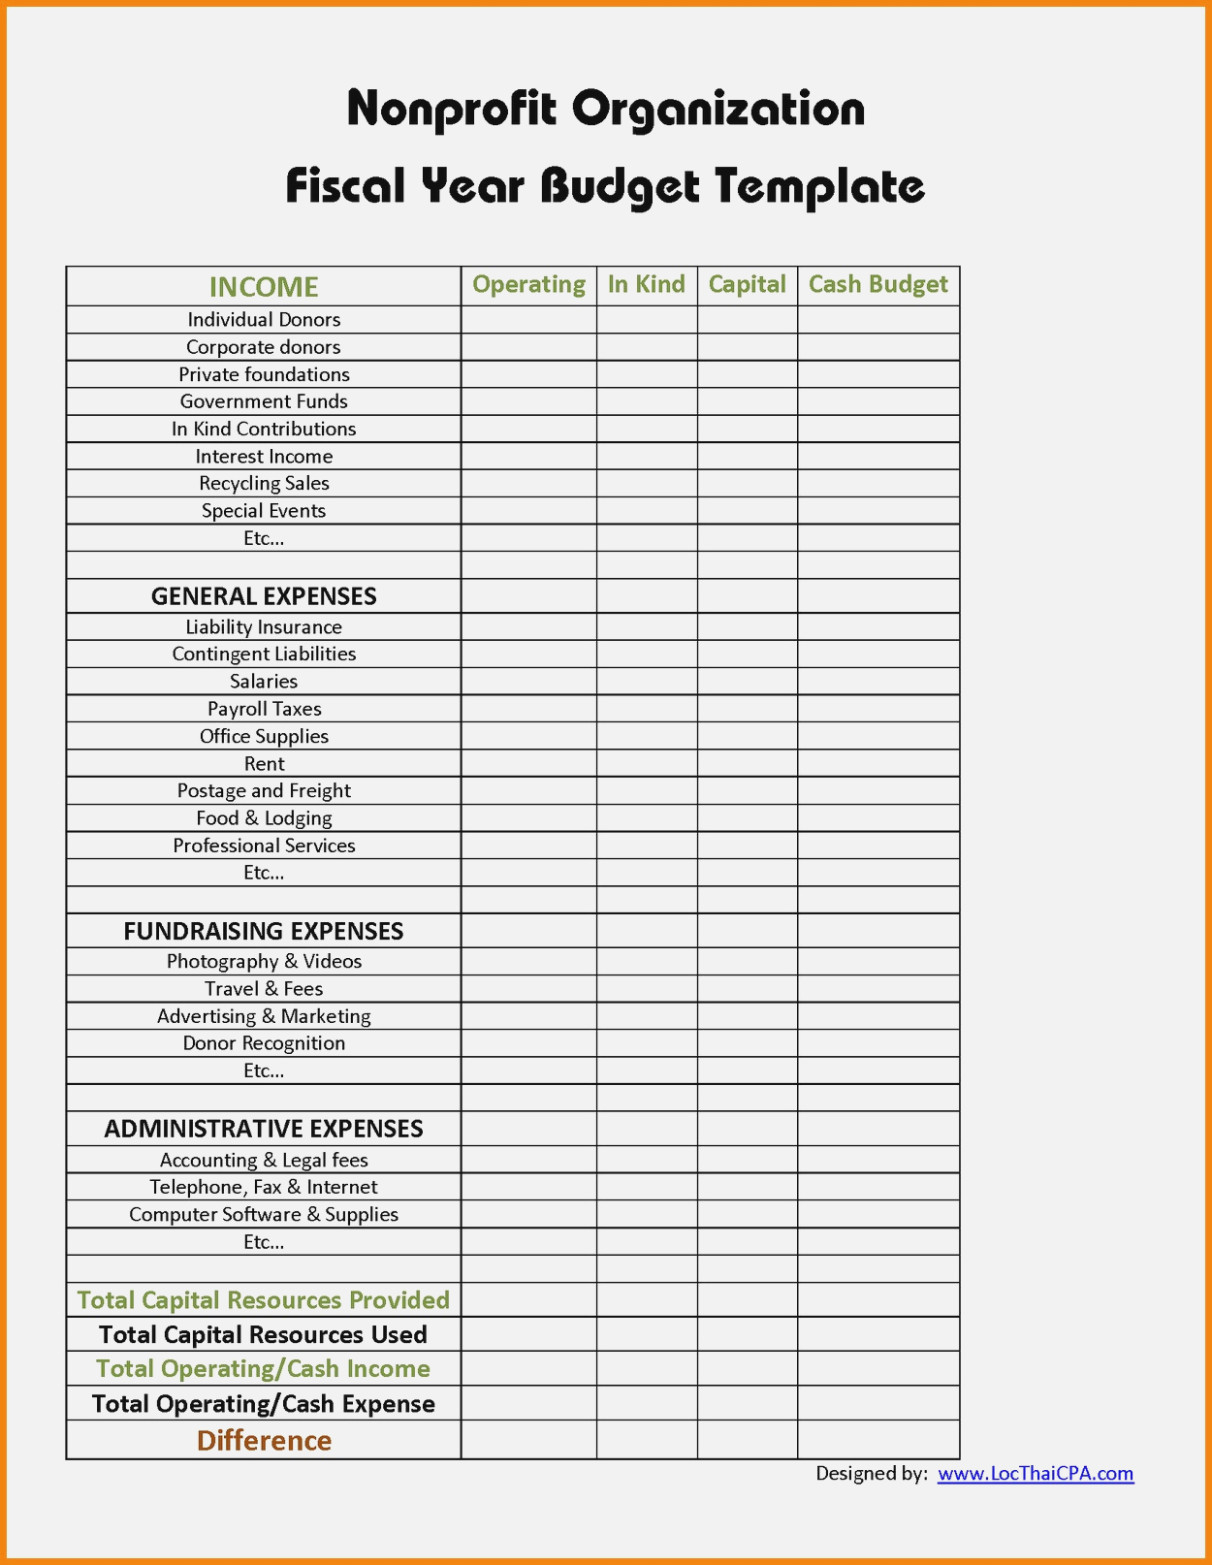 10 Treasurers Report Template | Resume Samples With Regard To Treasurer Report Template Non Profit